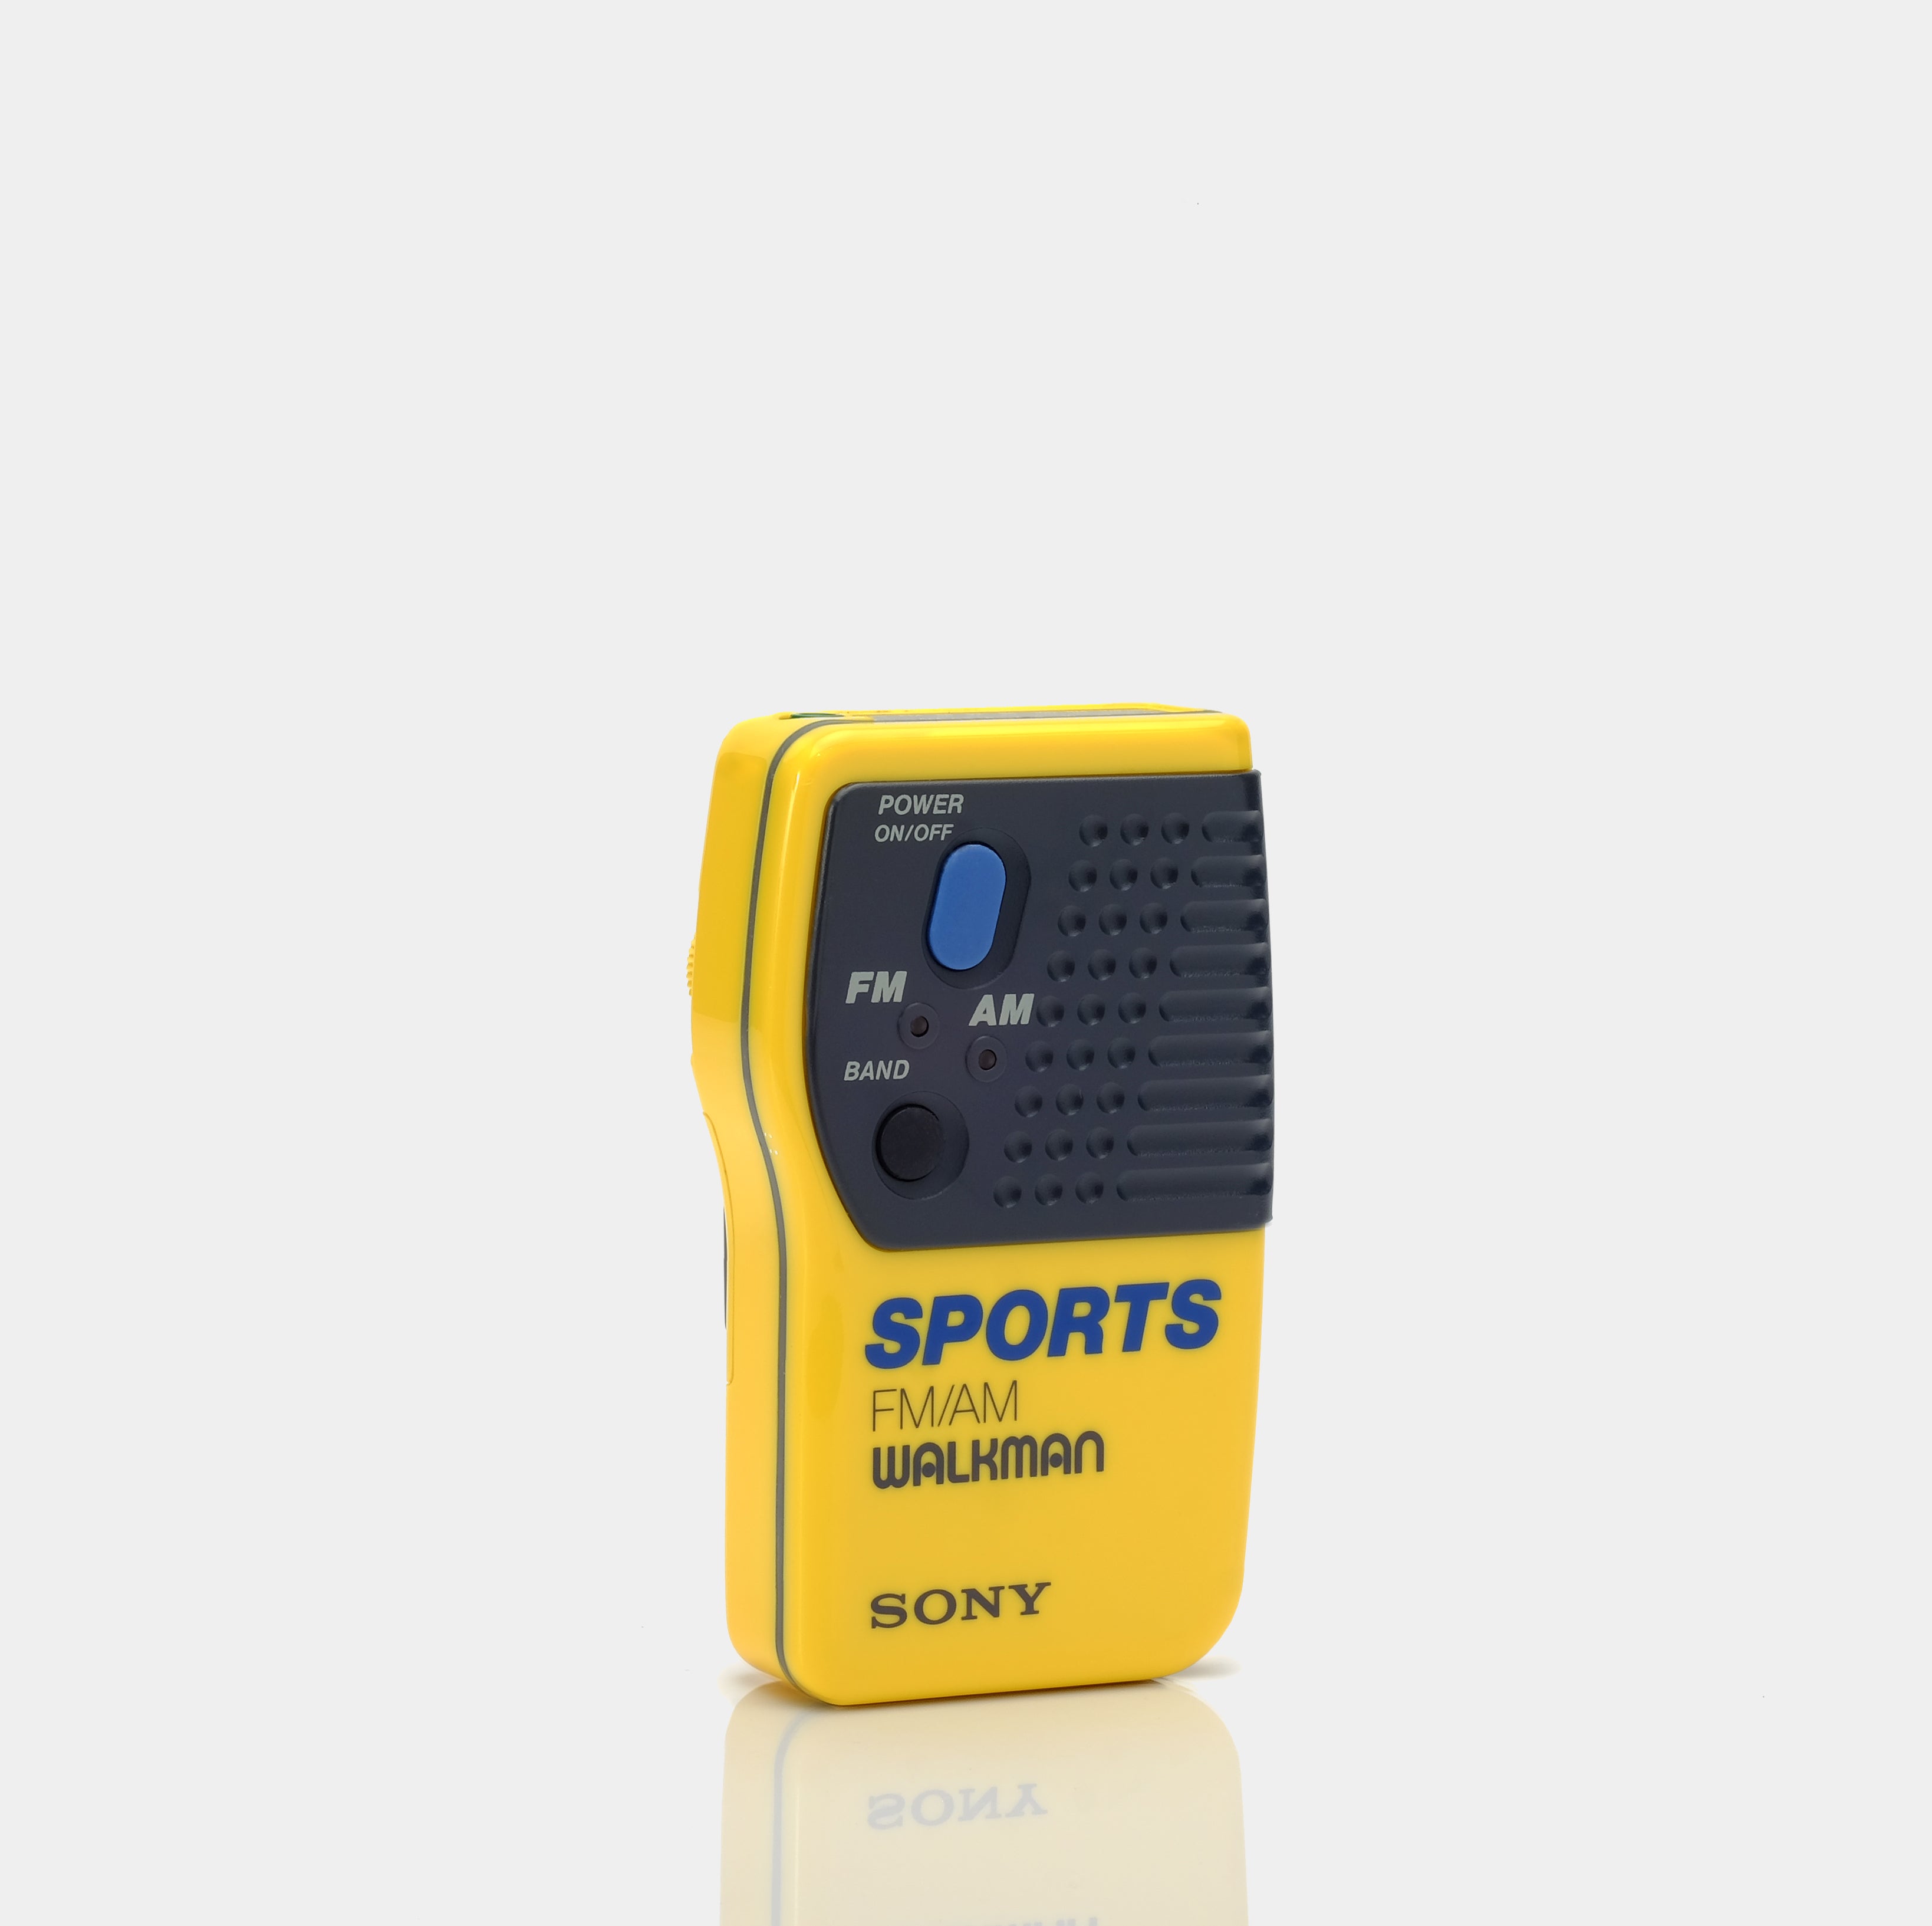 Sony Sports Walkman SRF-8 AM/FM Portable Radio